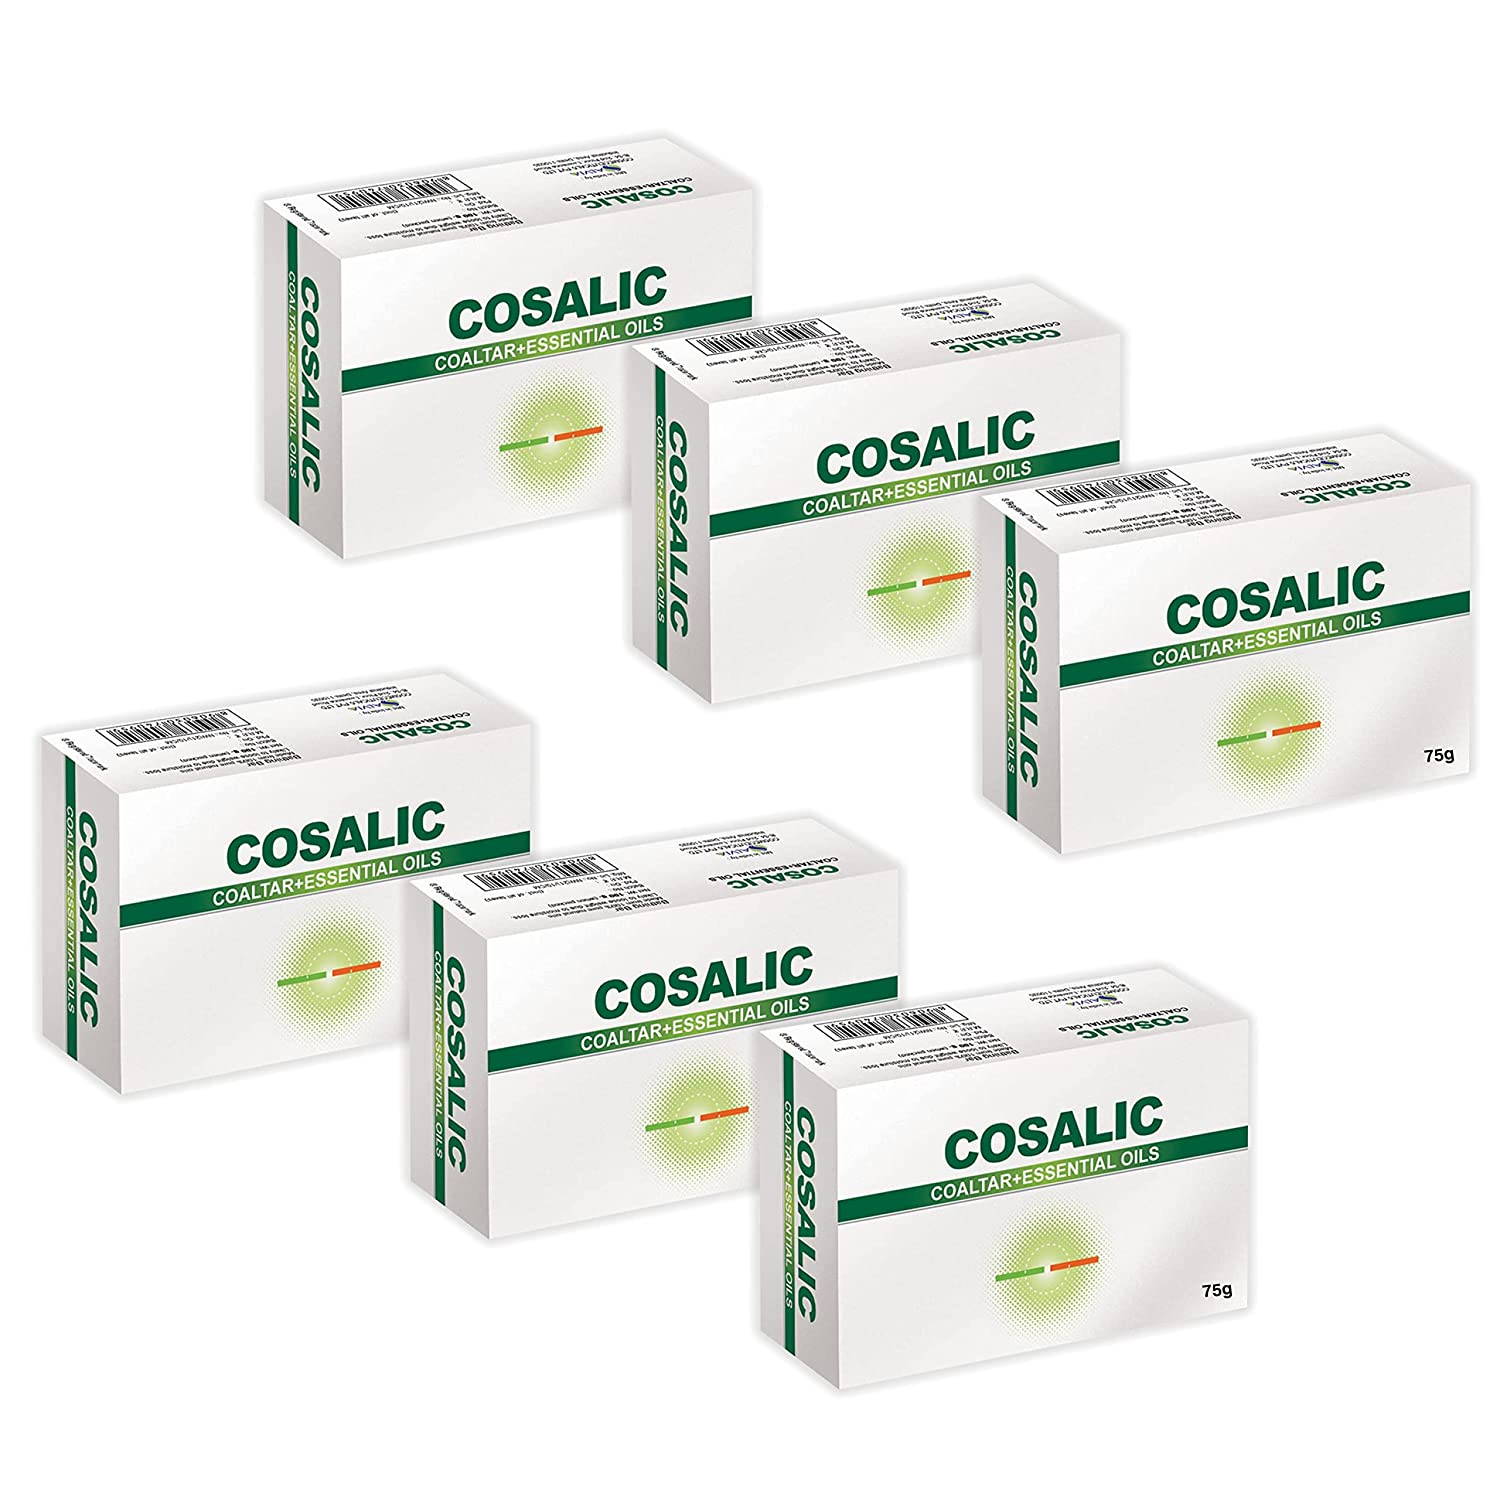 Salve Cosalic Soap Pack of 6 Cosalic Coaltar Soap with Essential oils